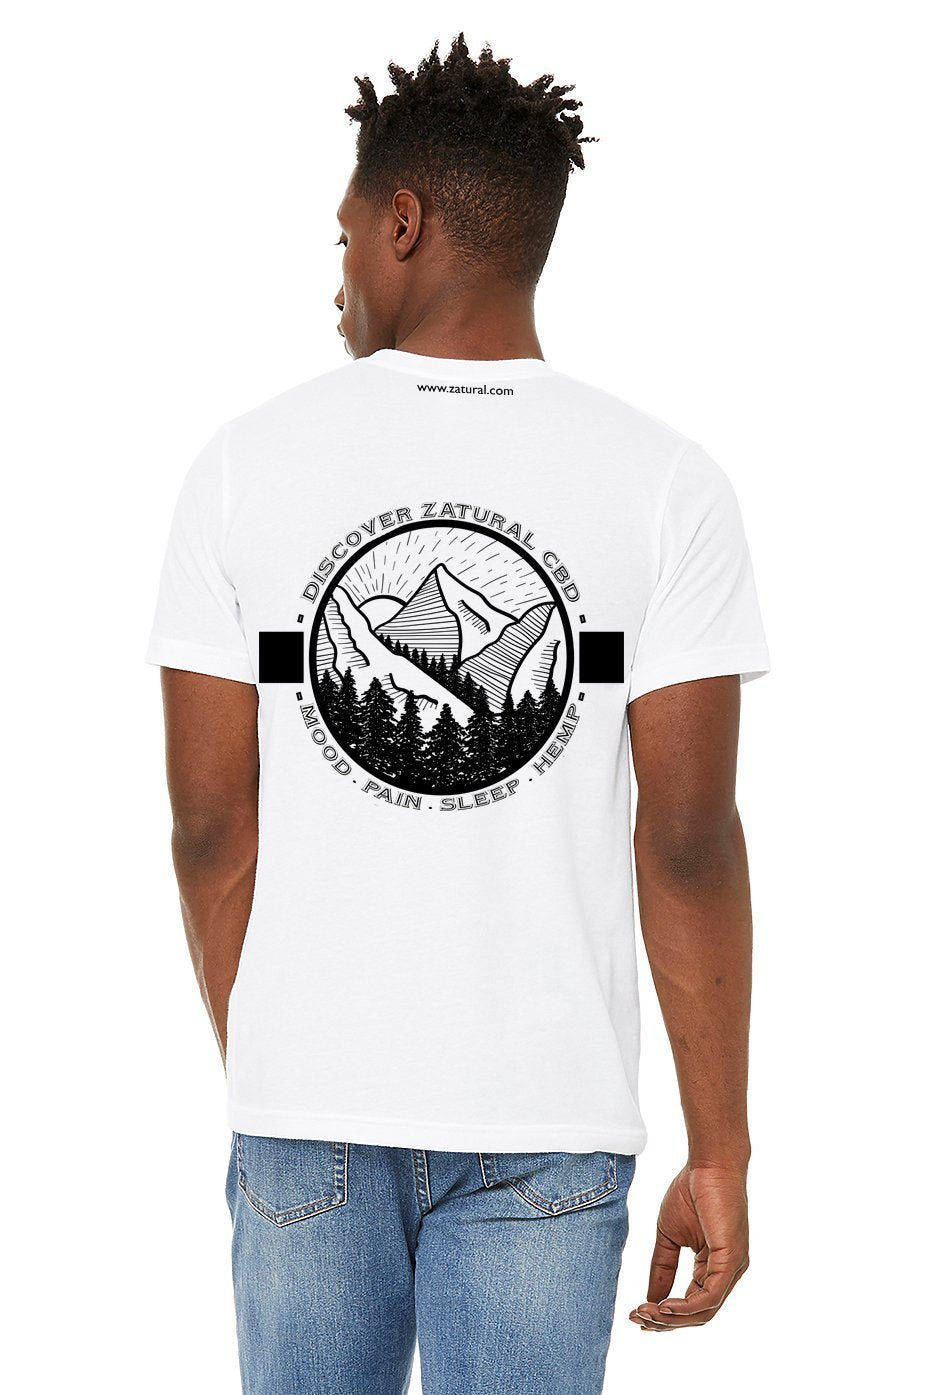 'Discover Zatural' Unisex Mountain Graphic